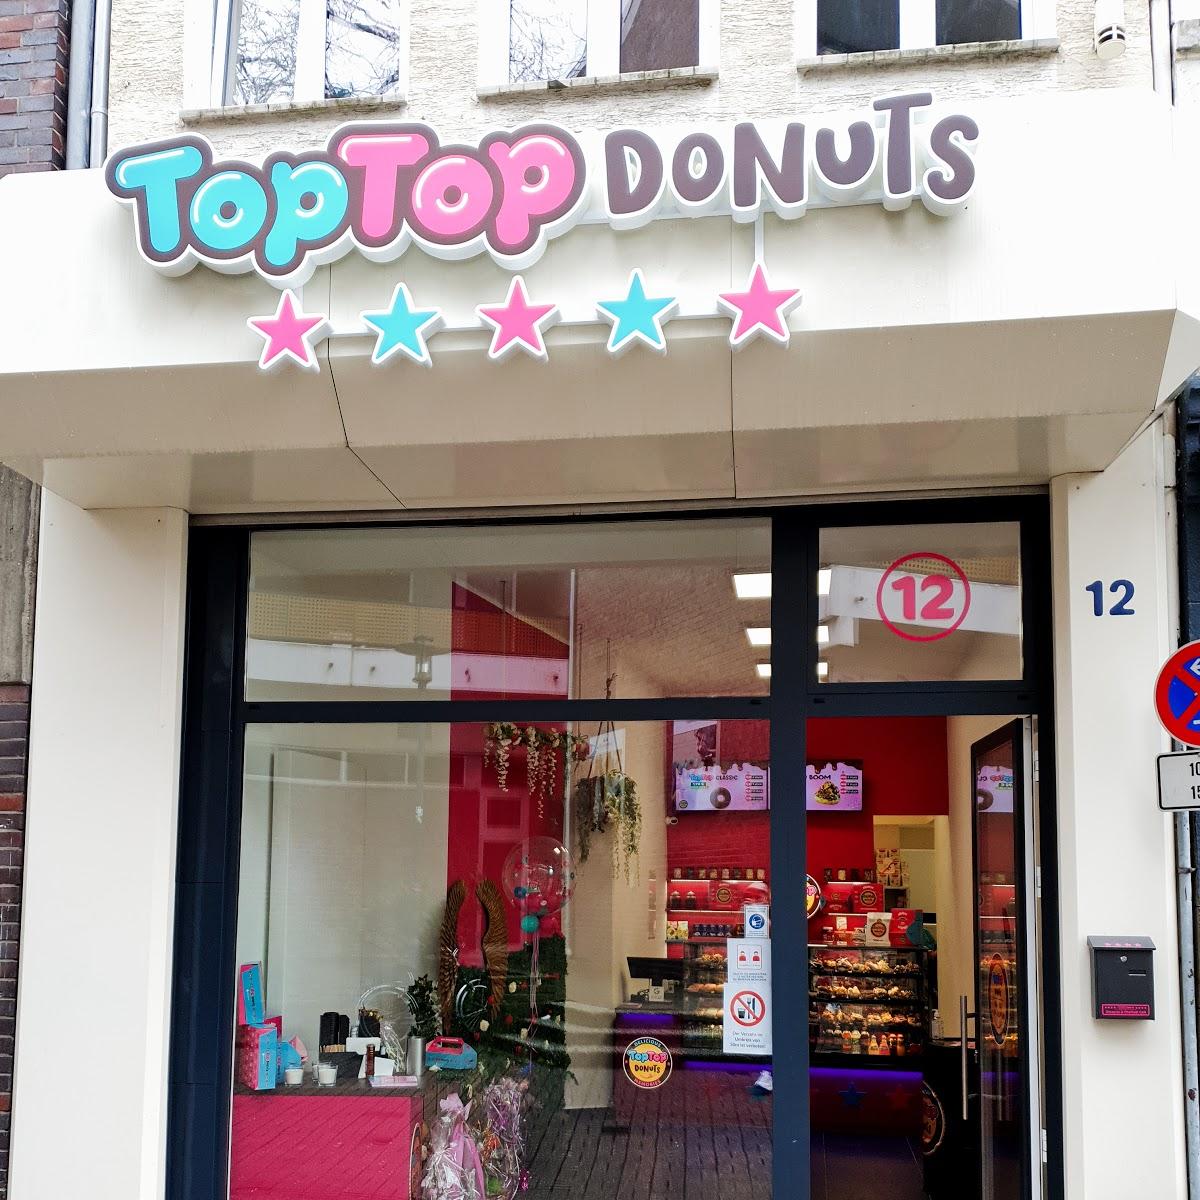 Restaurant "Top Top Donuts" in Krefeld